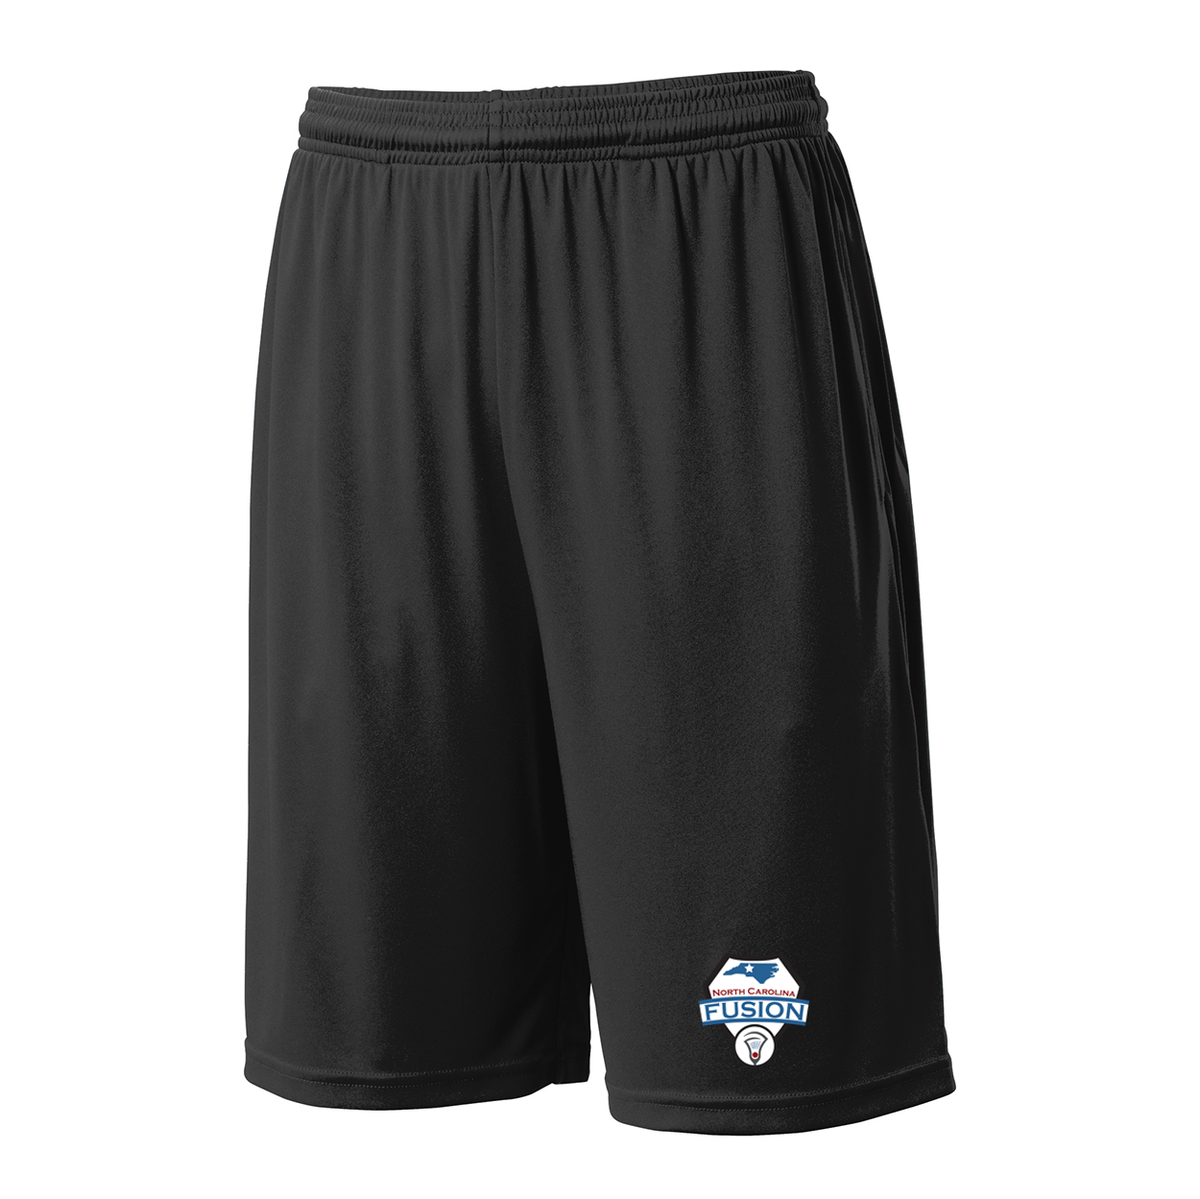 Fusion Lacrosse Shorts